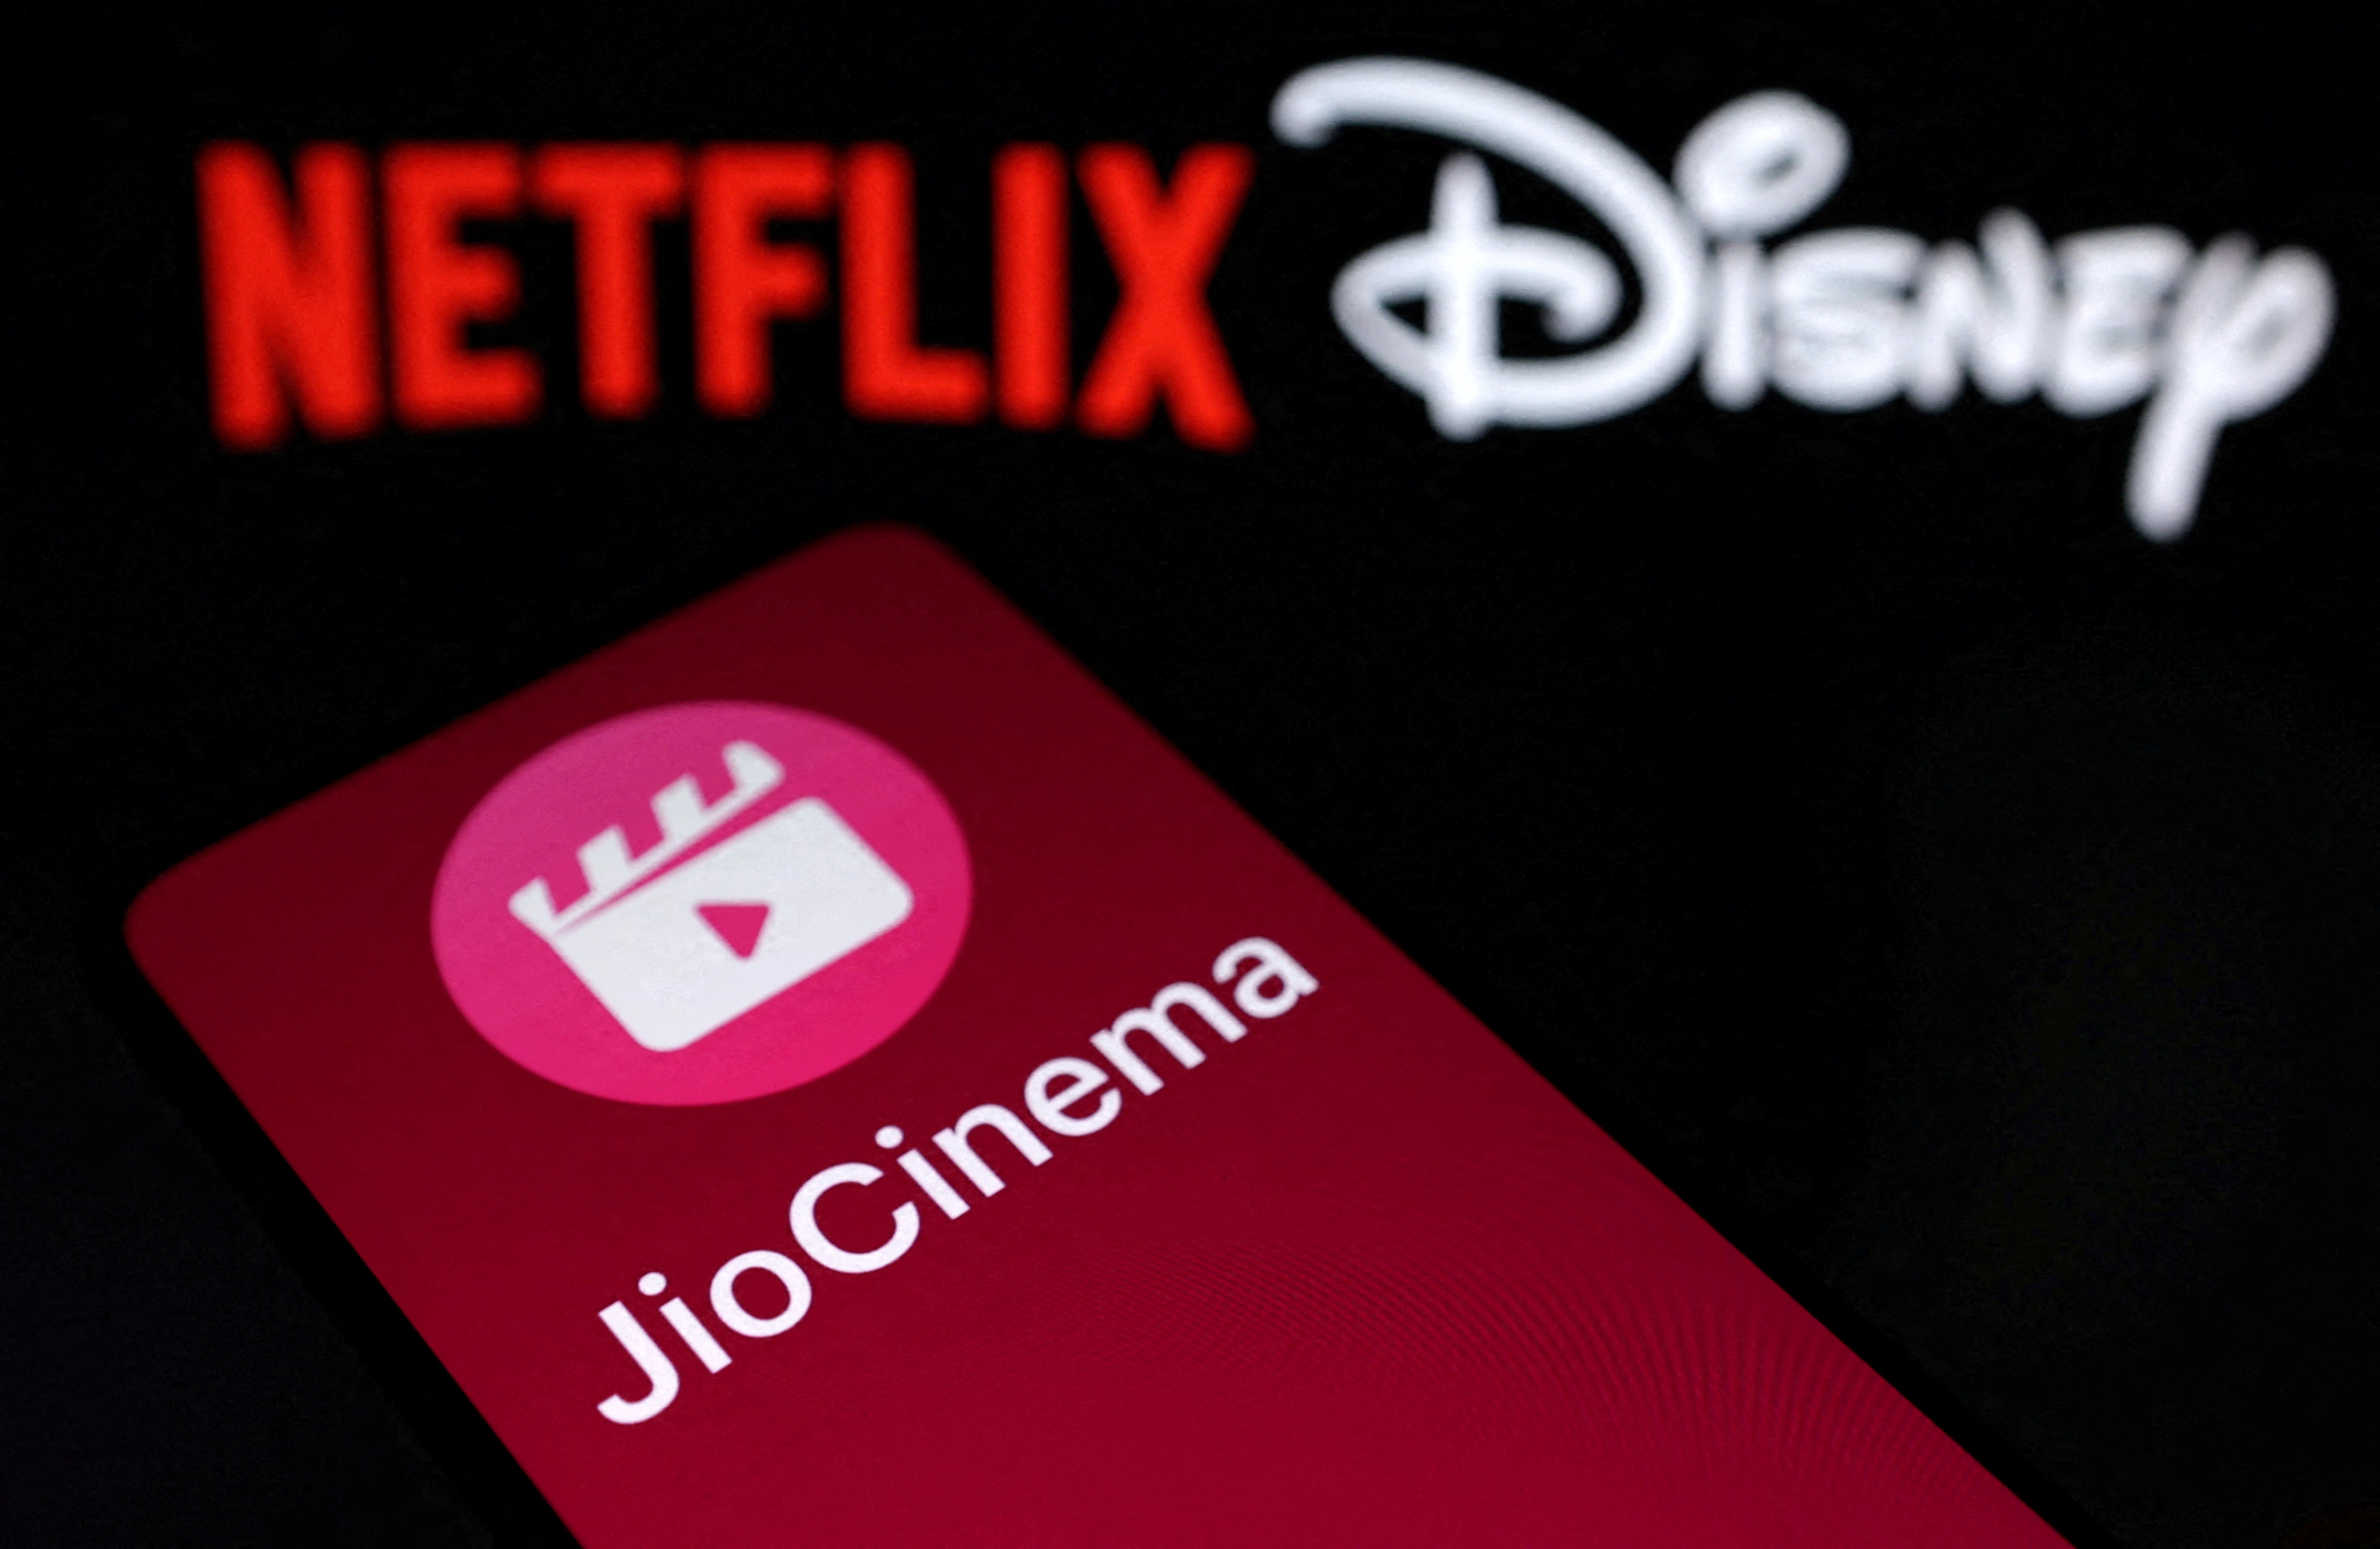 Illustration shows JioCinema, Netflix and Disney logos